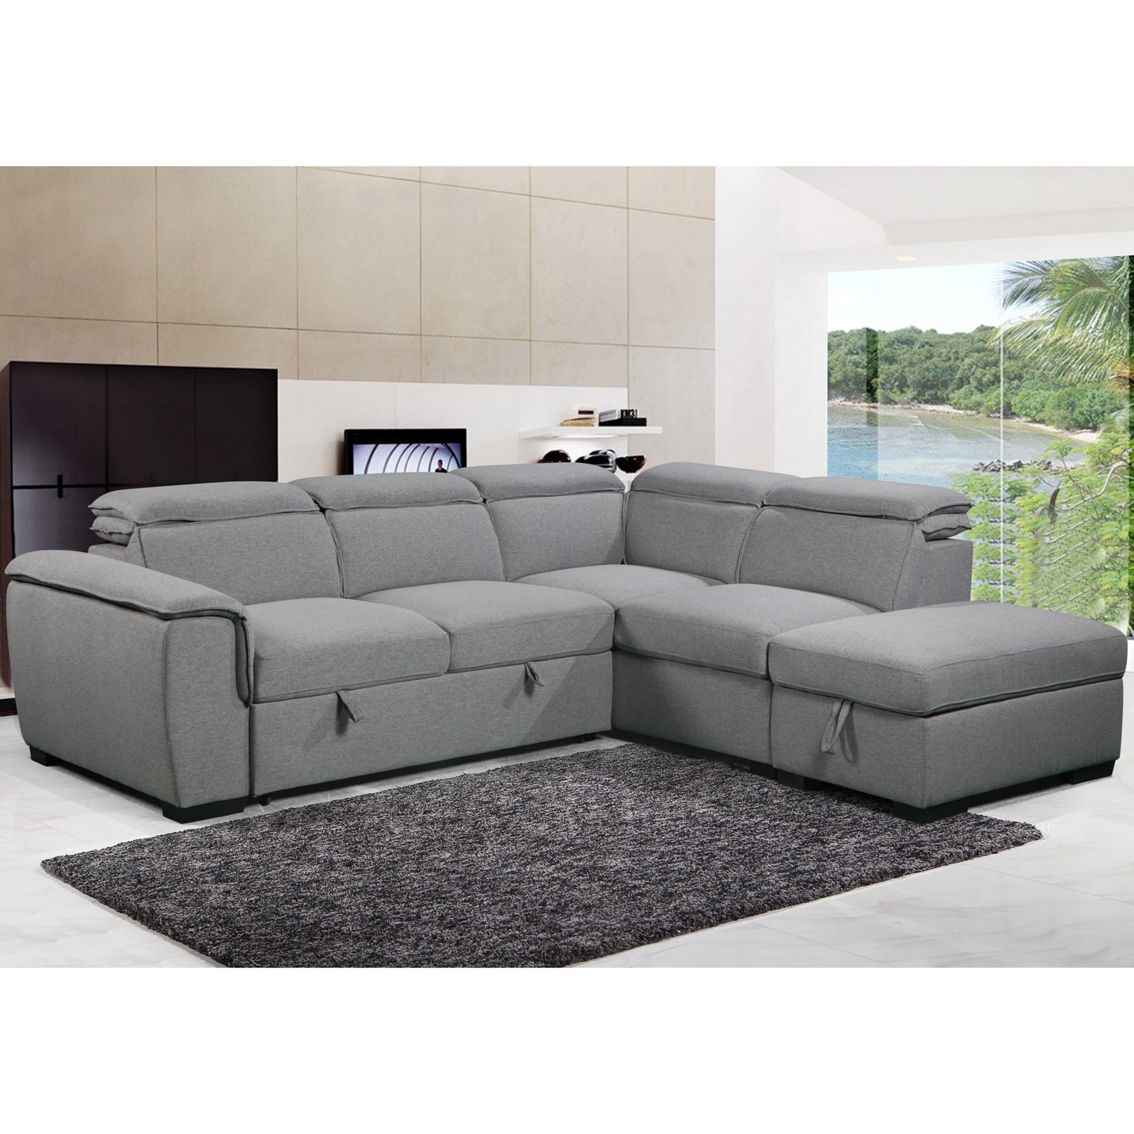 Primo International Joss Corner Sofa Bed with Storage - Image 3 of 5